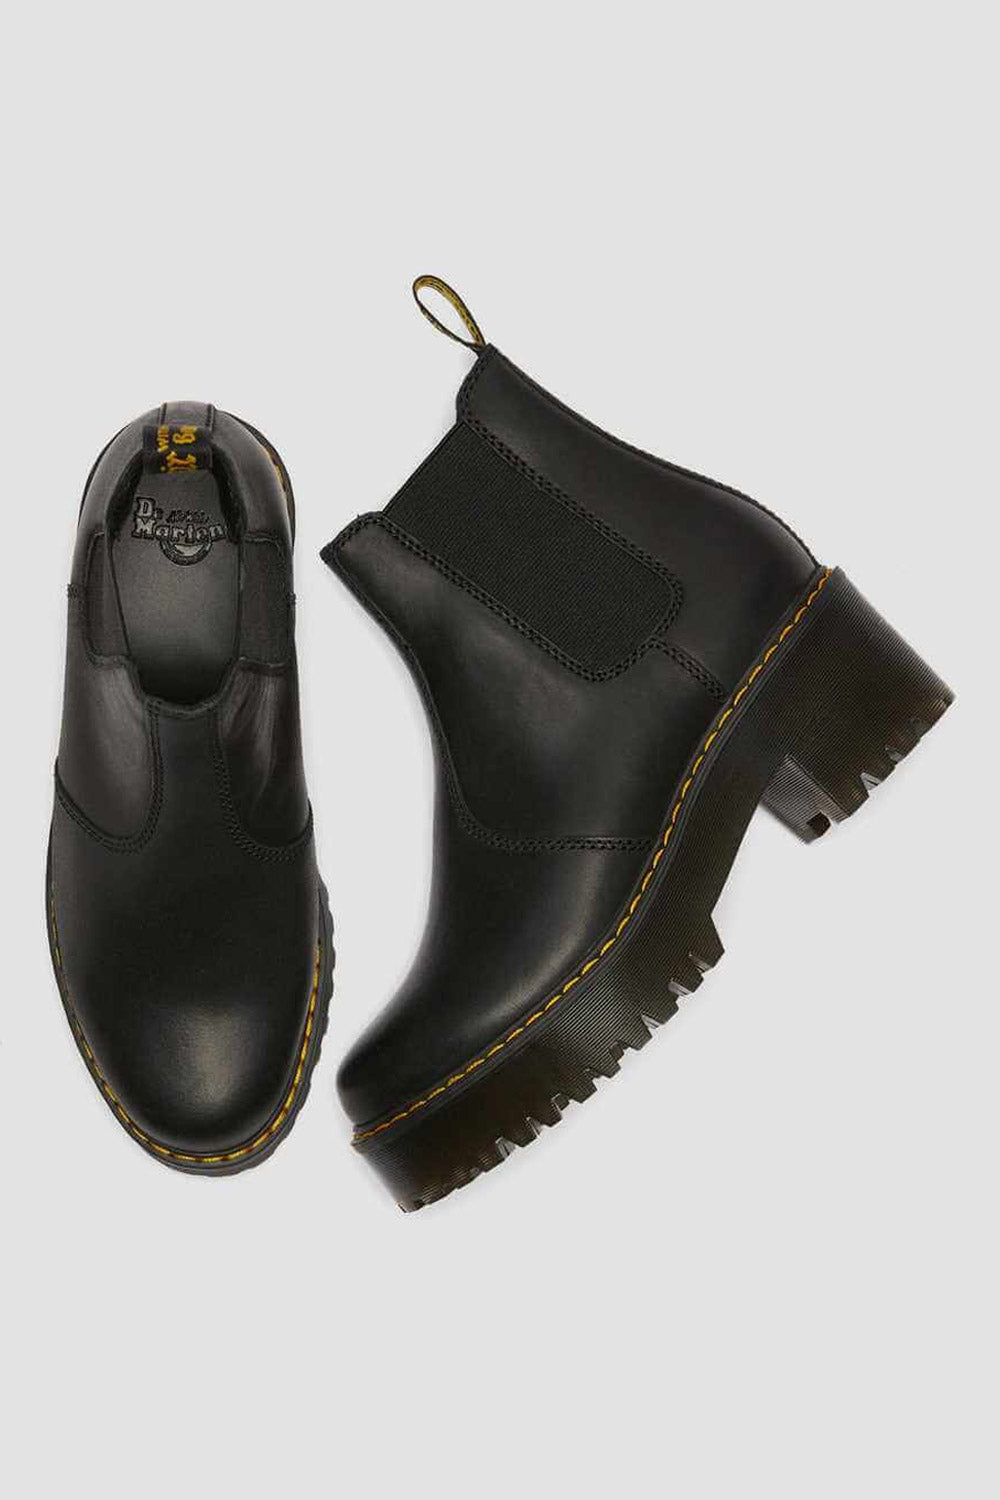 Martens Rometty Wyoming Platform Chelsea Boots for Women in Black – Glik's